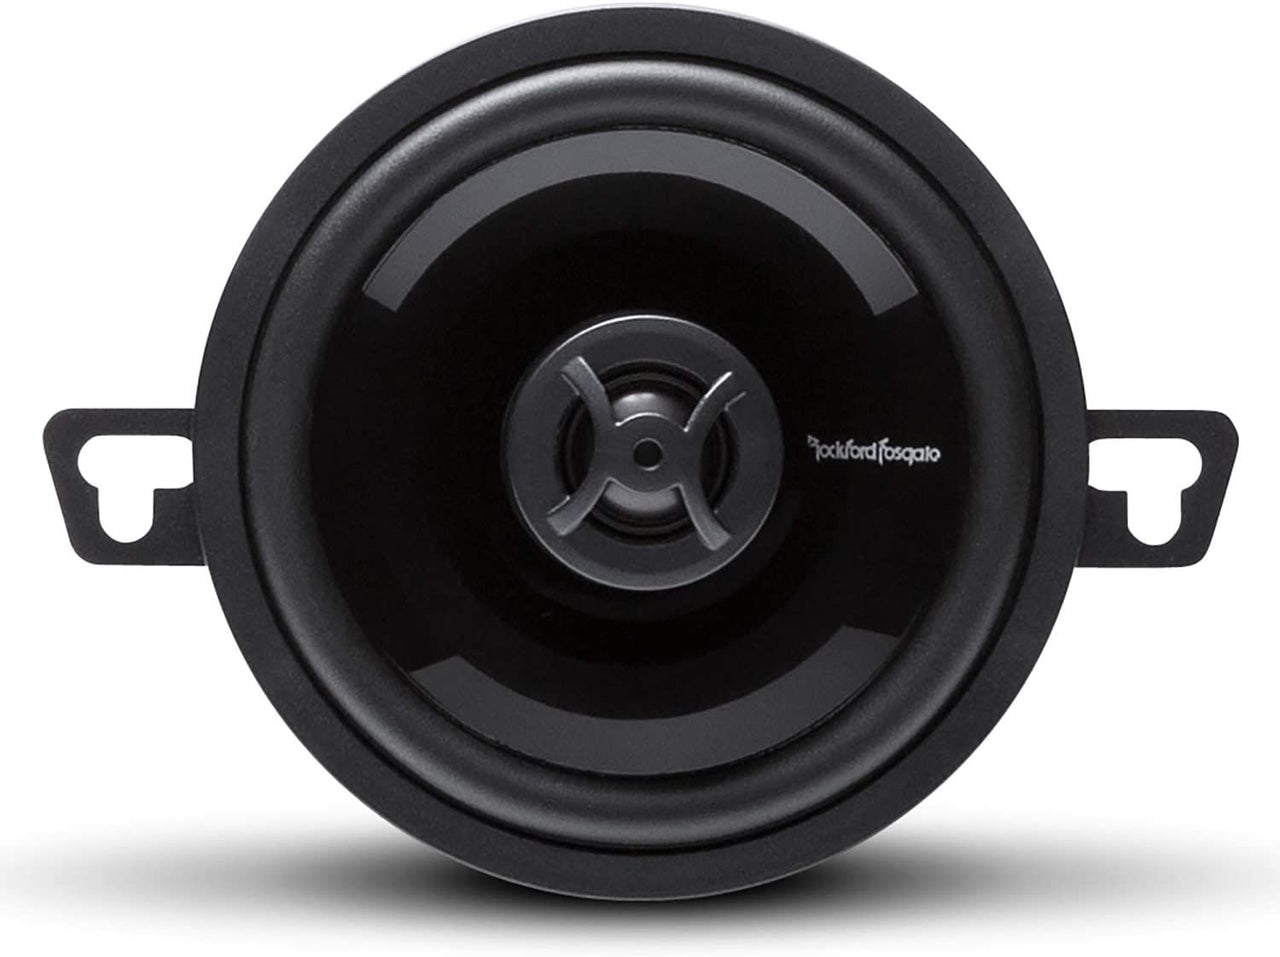 Rockford Fosgate Punch P132 160W 3.5" 2-Way Full-Range Car Audio Speakers